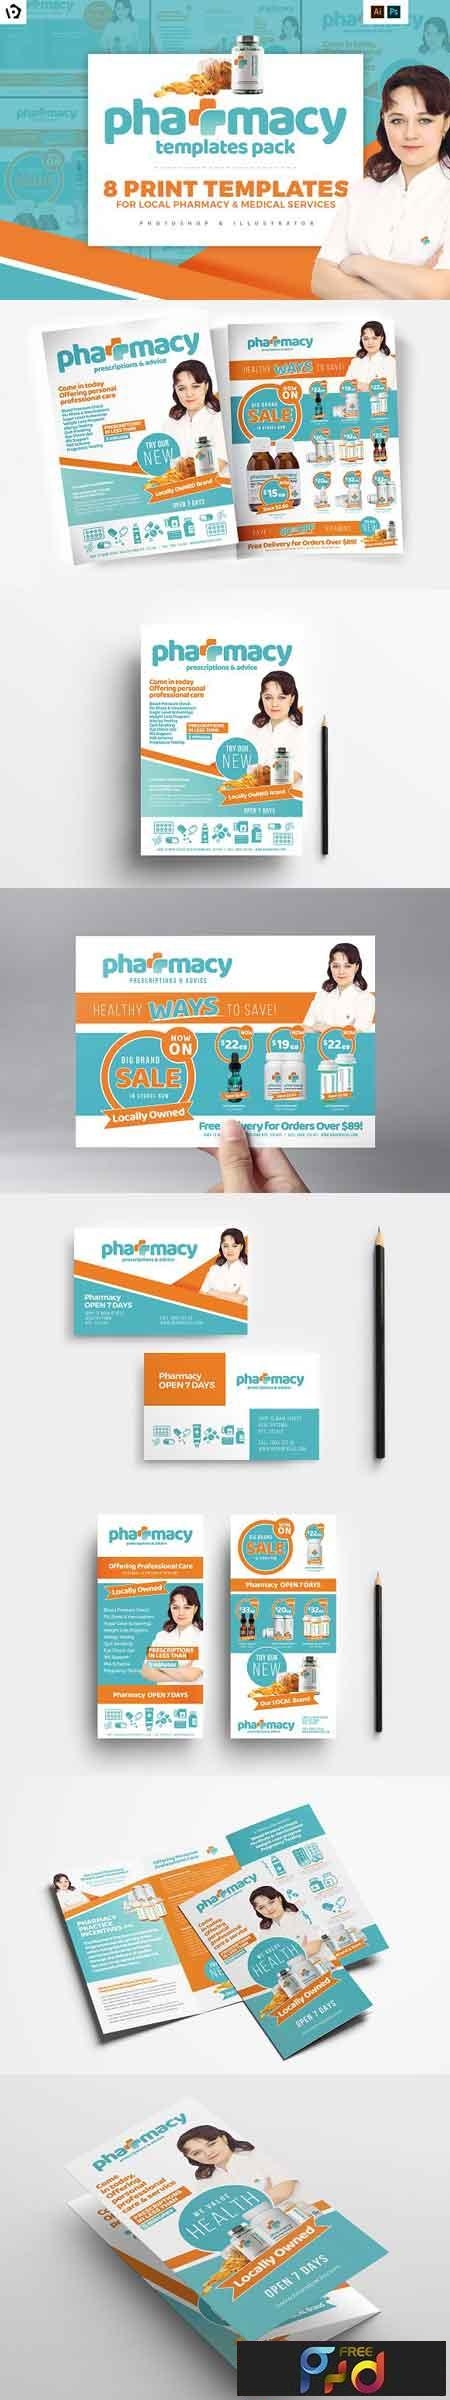 FreePsdVn.com 1815143 TEMPLATE pharmacy templates pack 1883047